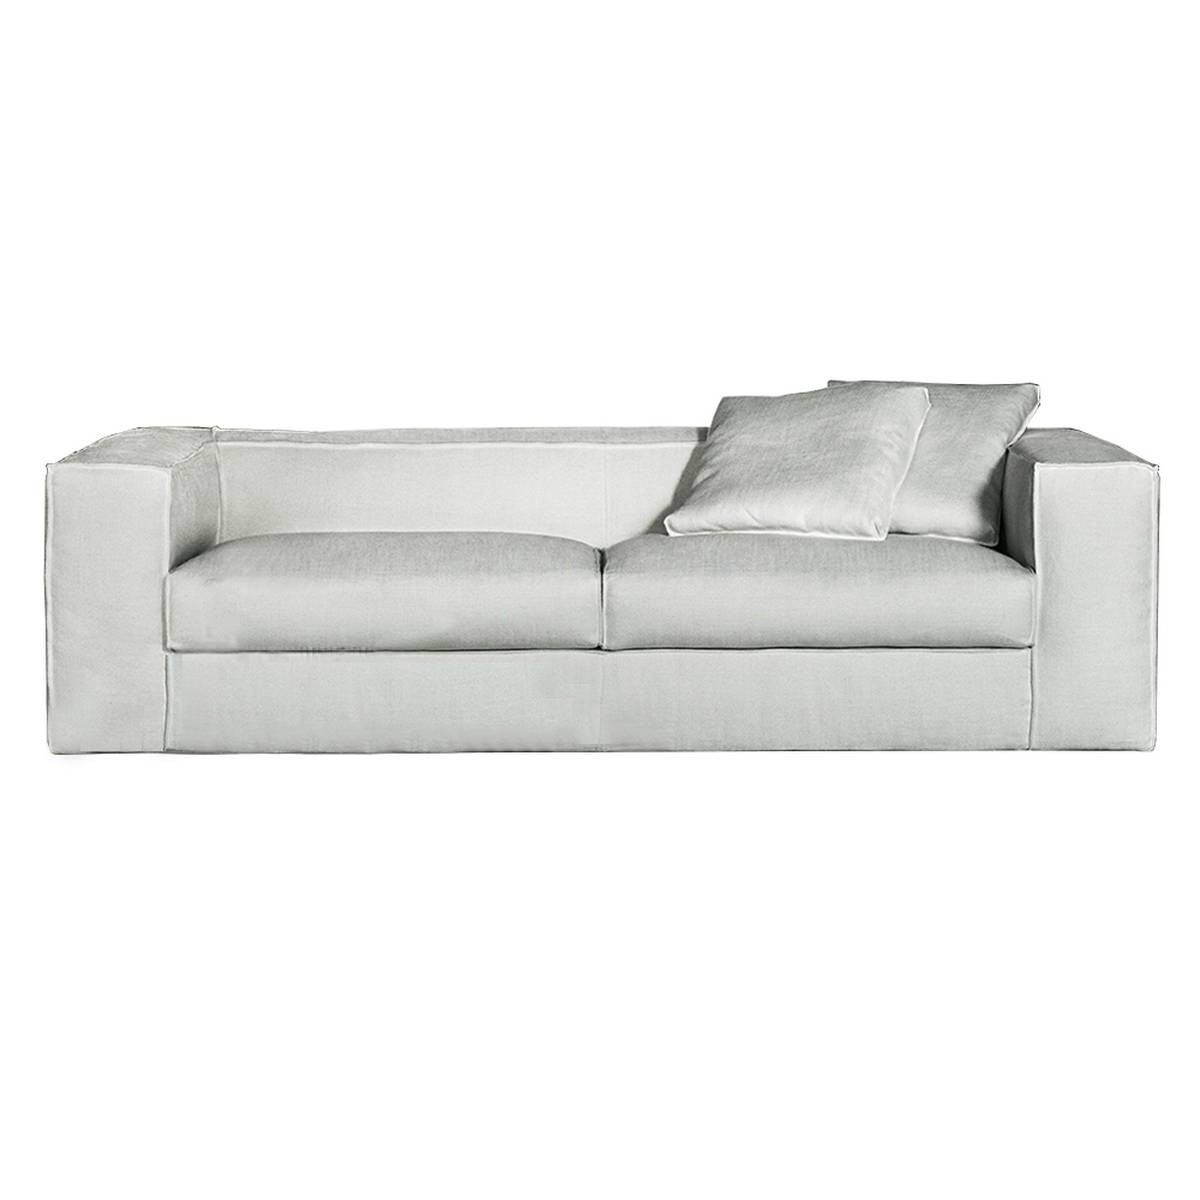 Прямой диван Neowall sofa bed из Италии фабрики LIVING DIVANI